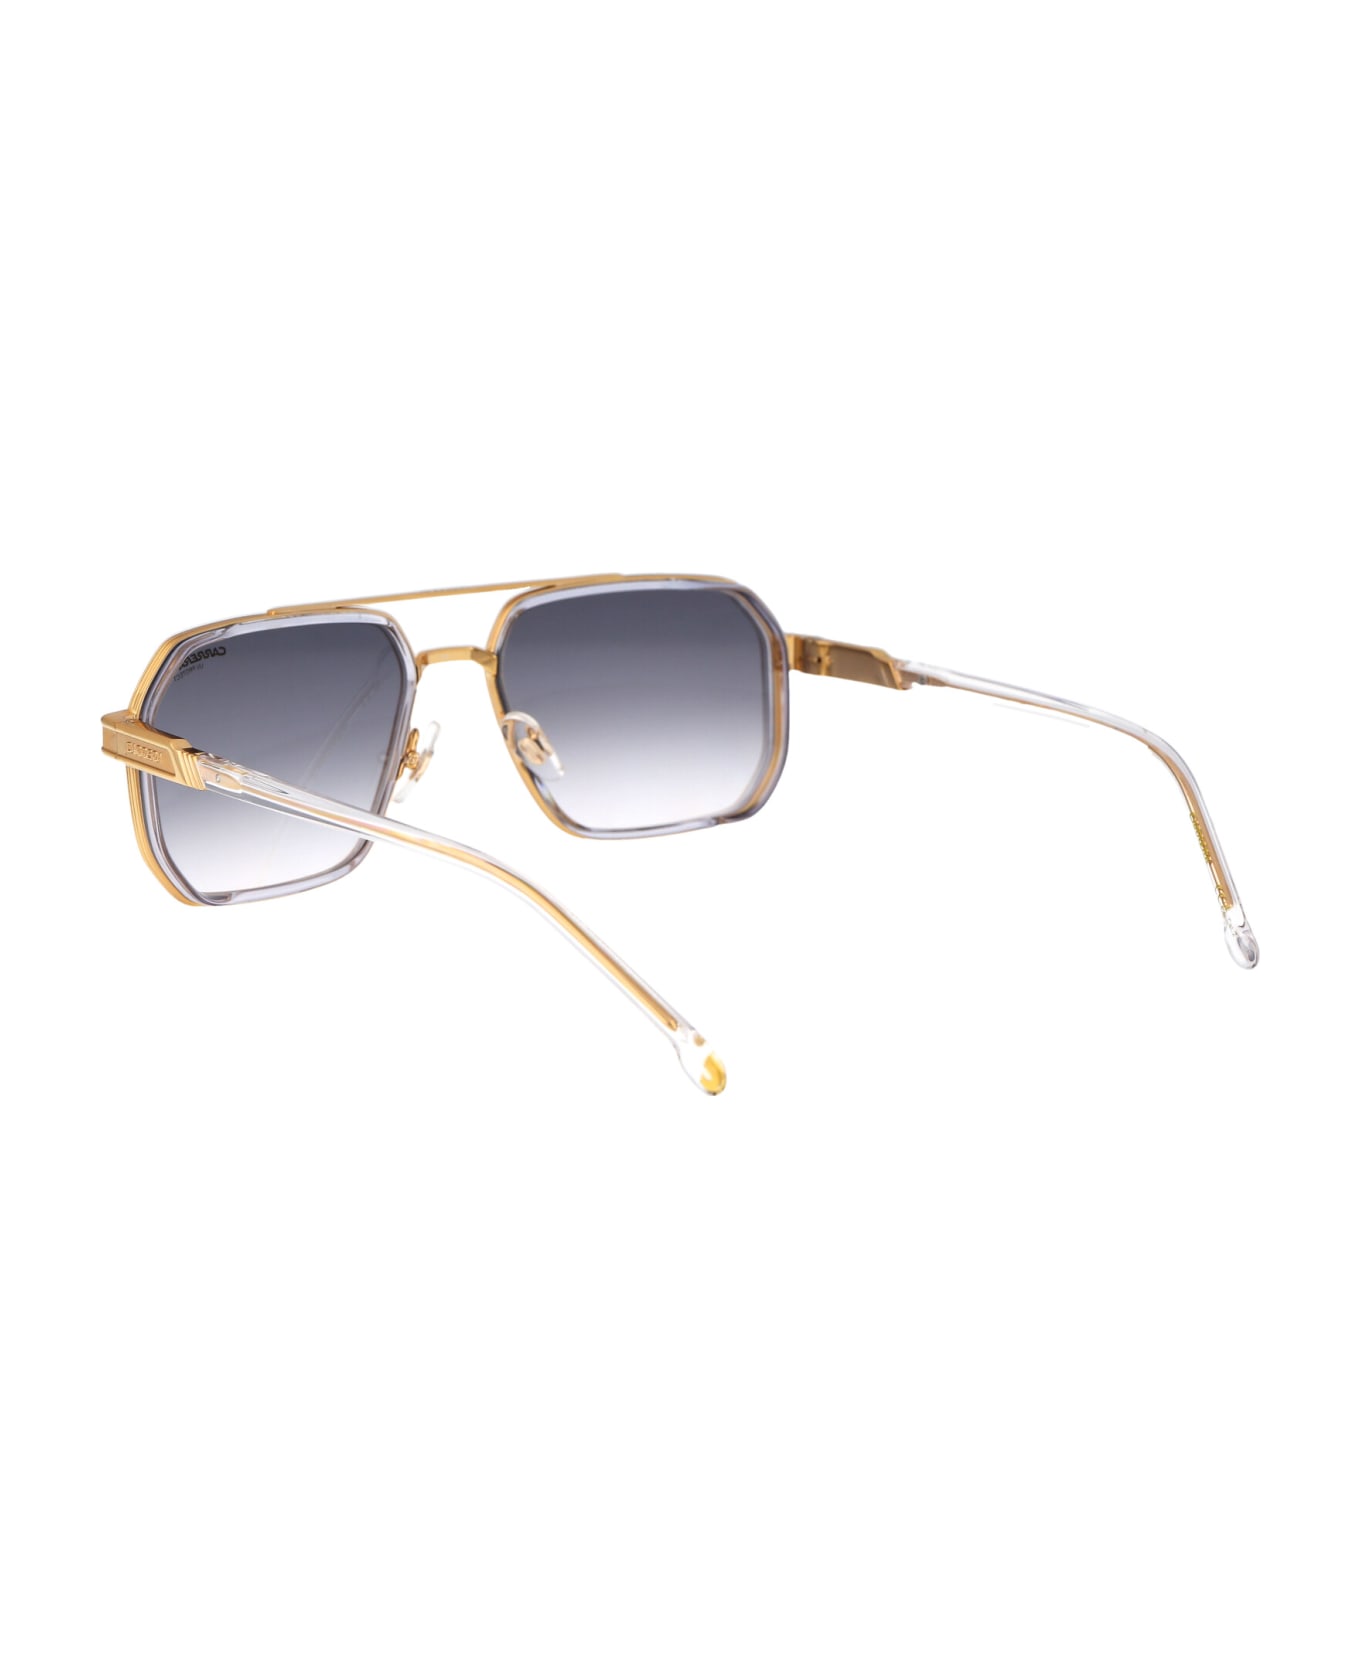 Carrera 1069/s Sunglasses - REJFQ CRYS GOLD サングラス